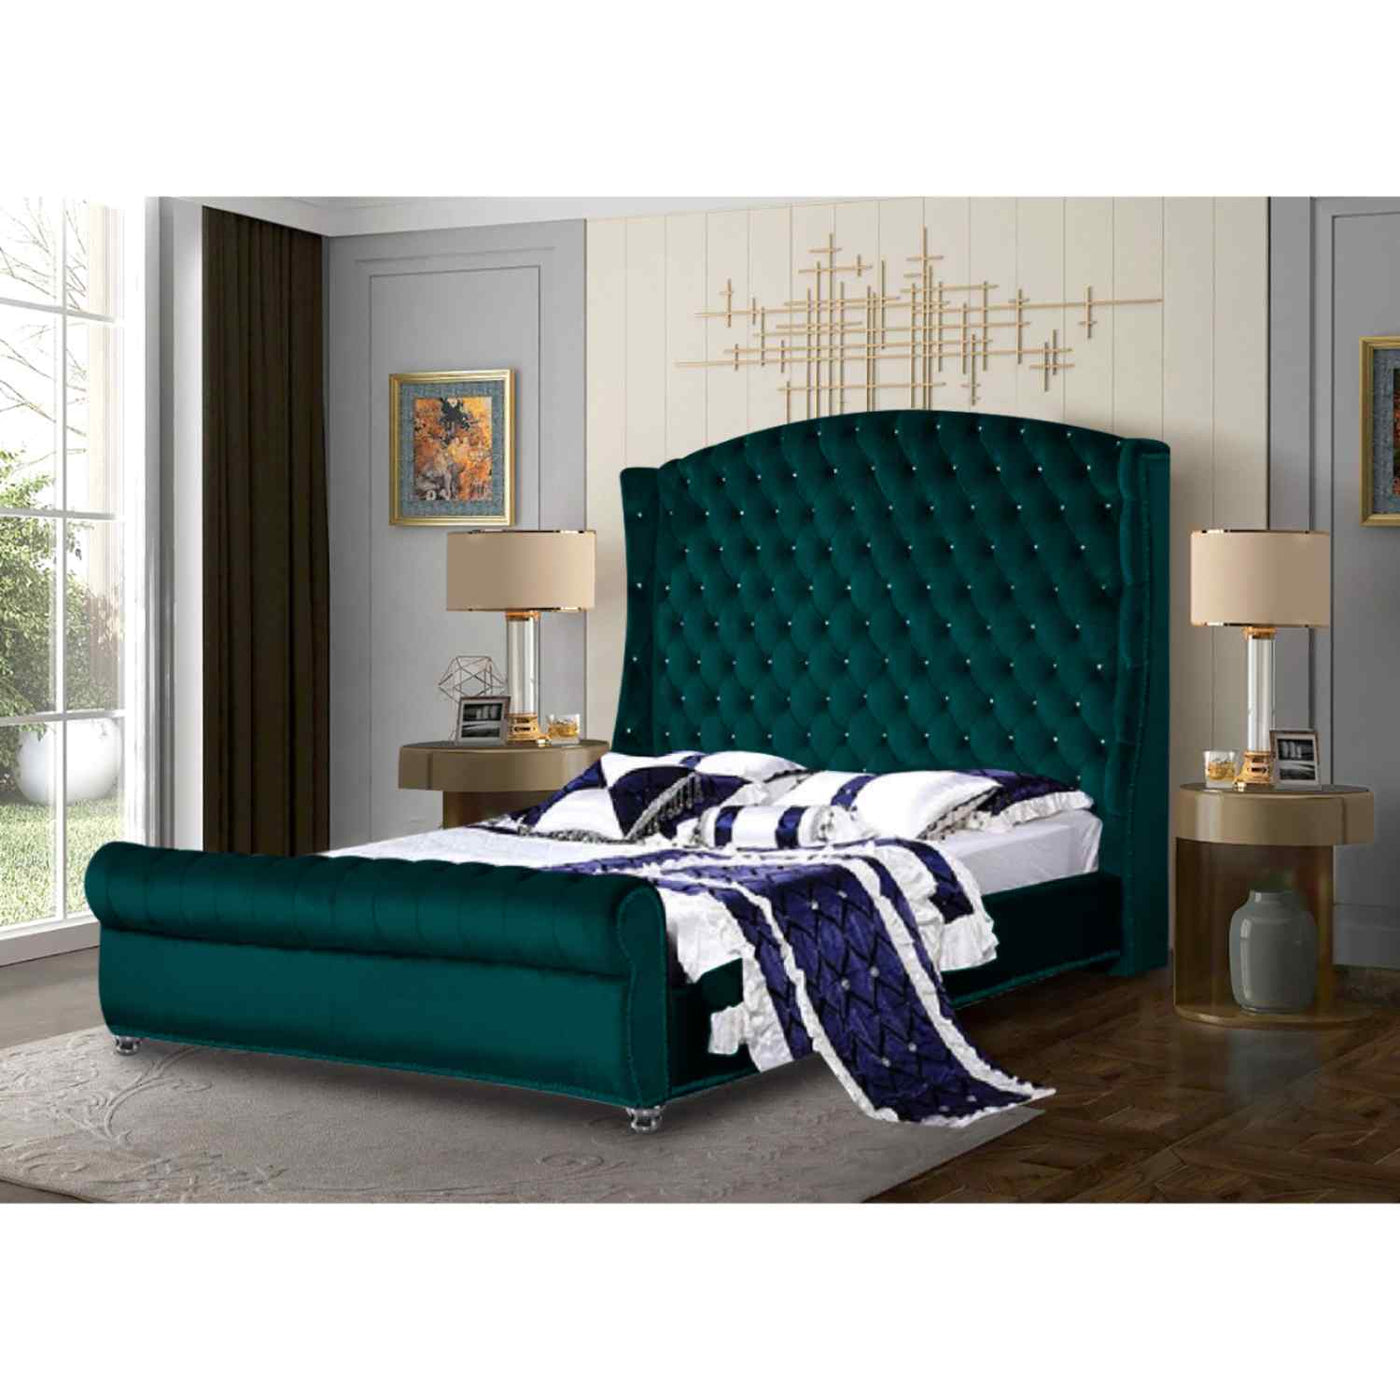 Luxury Kingston Bed